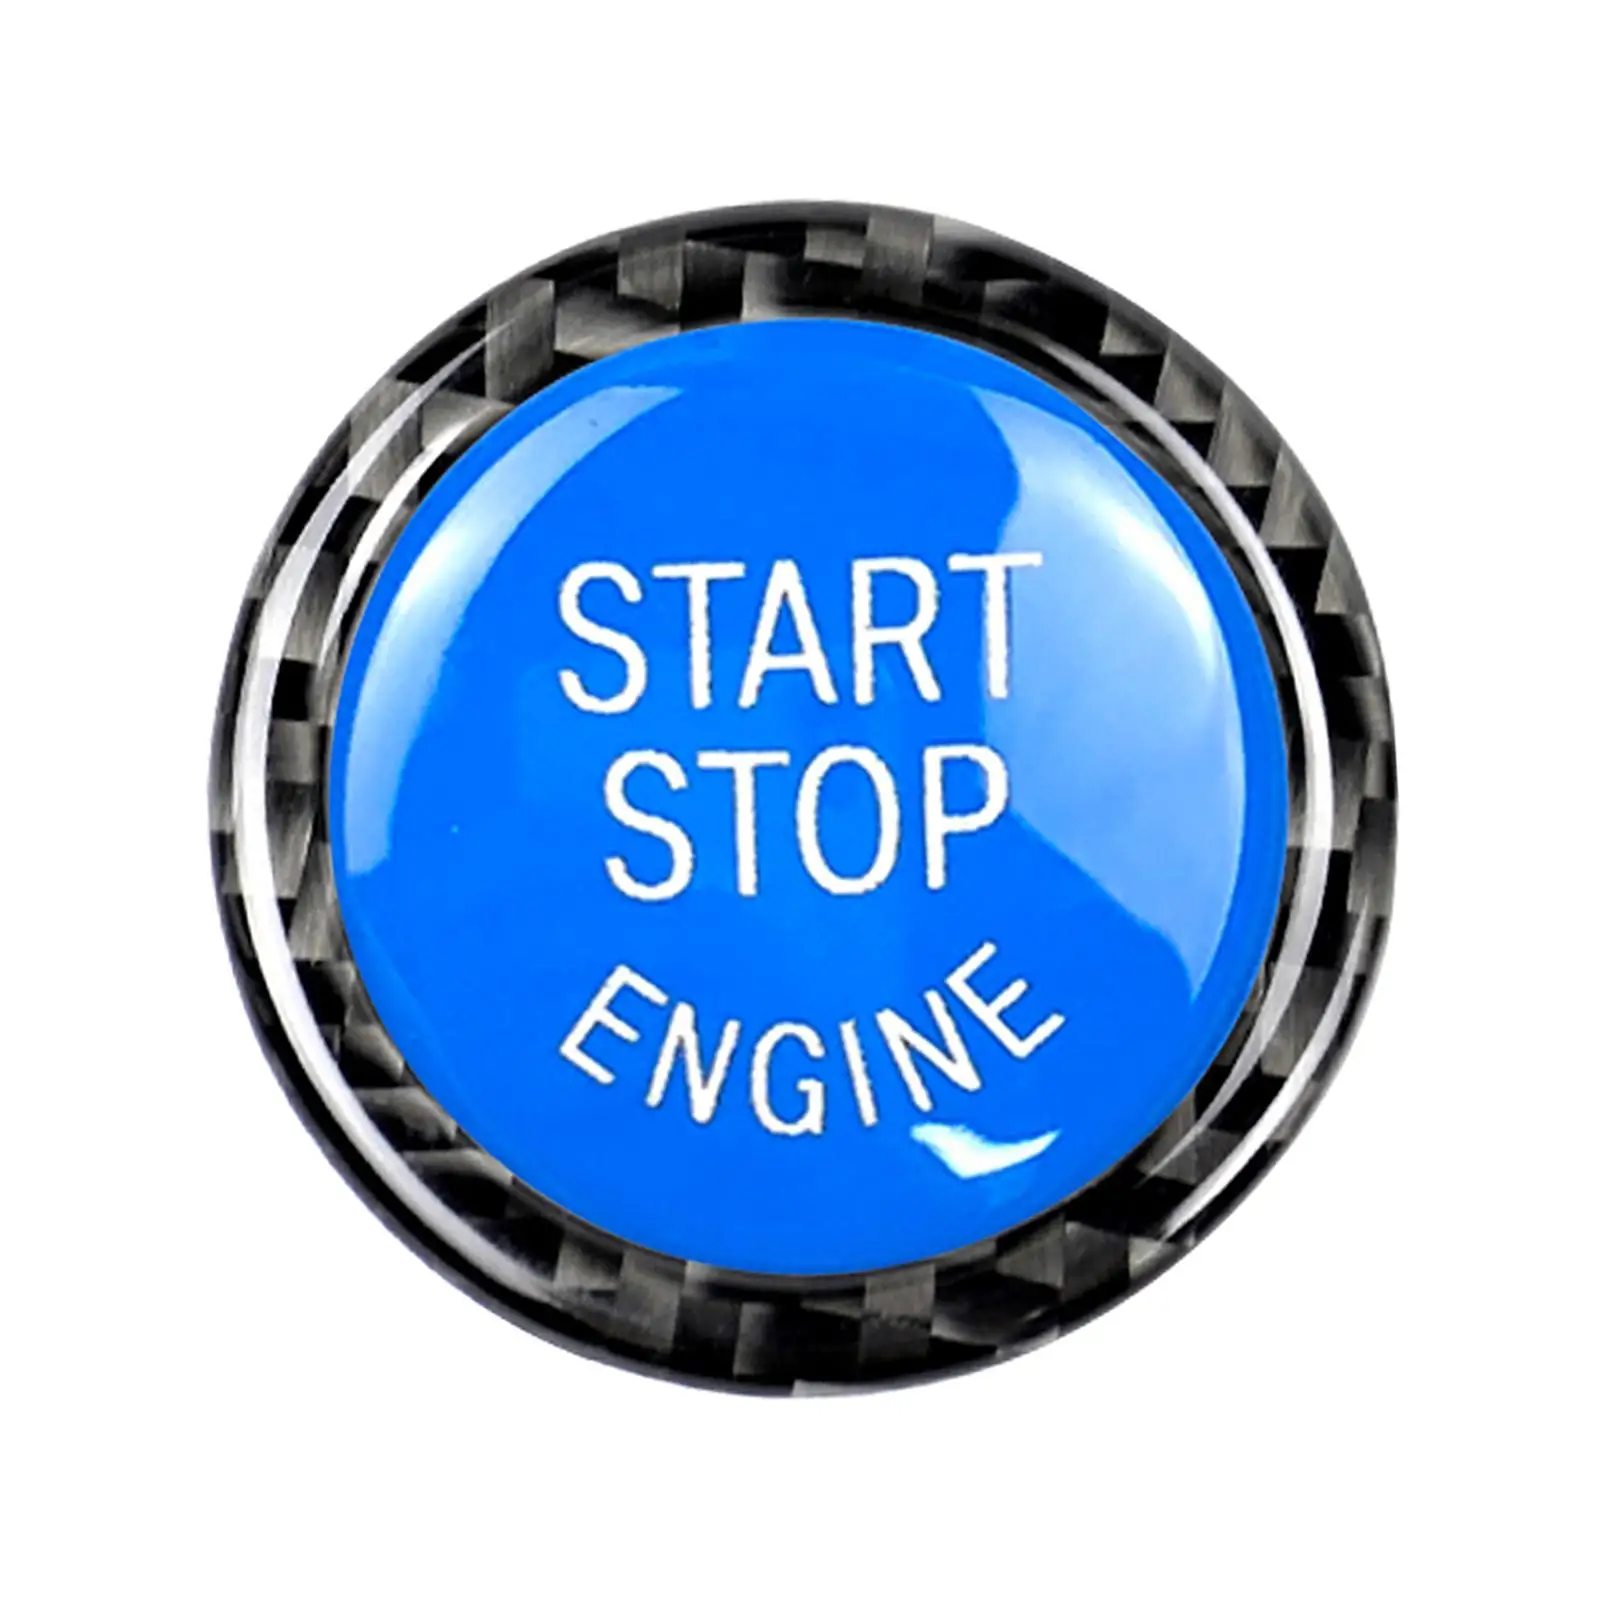 Engine Start Stop Button Cover Replace Cover Anti Scratch Protective Cover Sticker Cover Fit for E90 E92 E93 Accessories